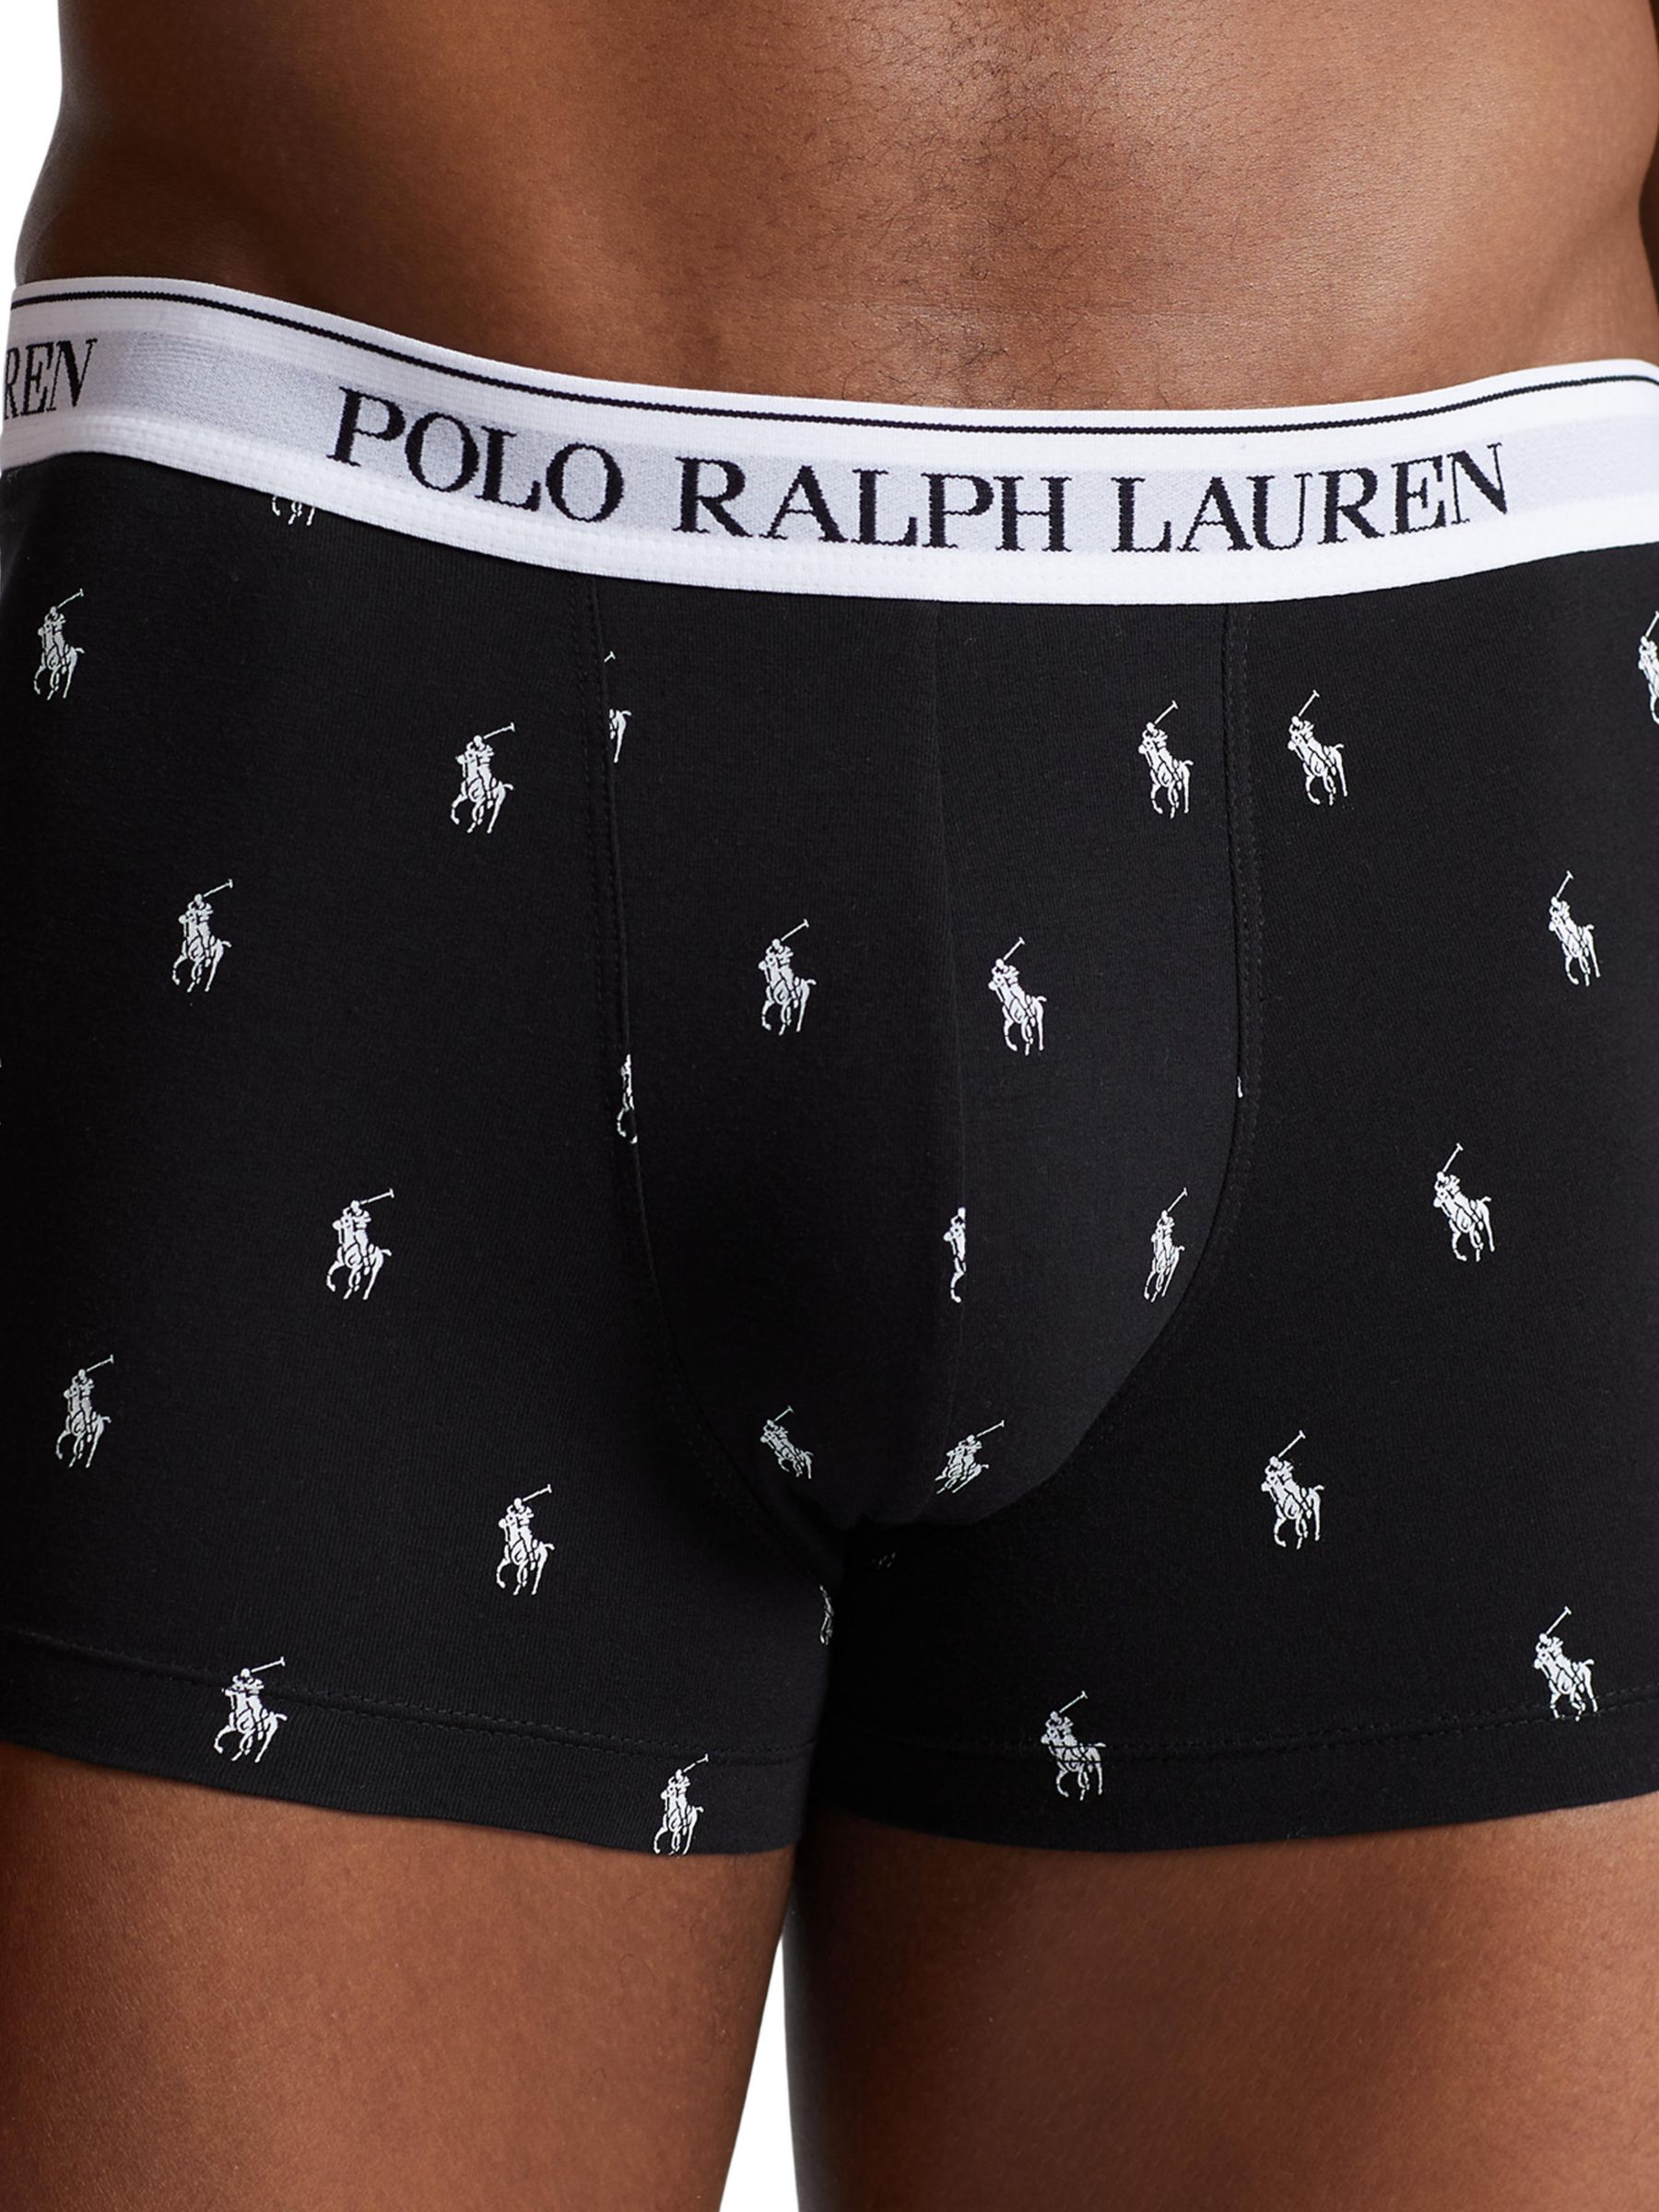 Polo Ralph Lauren Plain Logo Cotton Stretch Trunks, Pack of 5, Mono, S